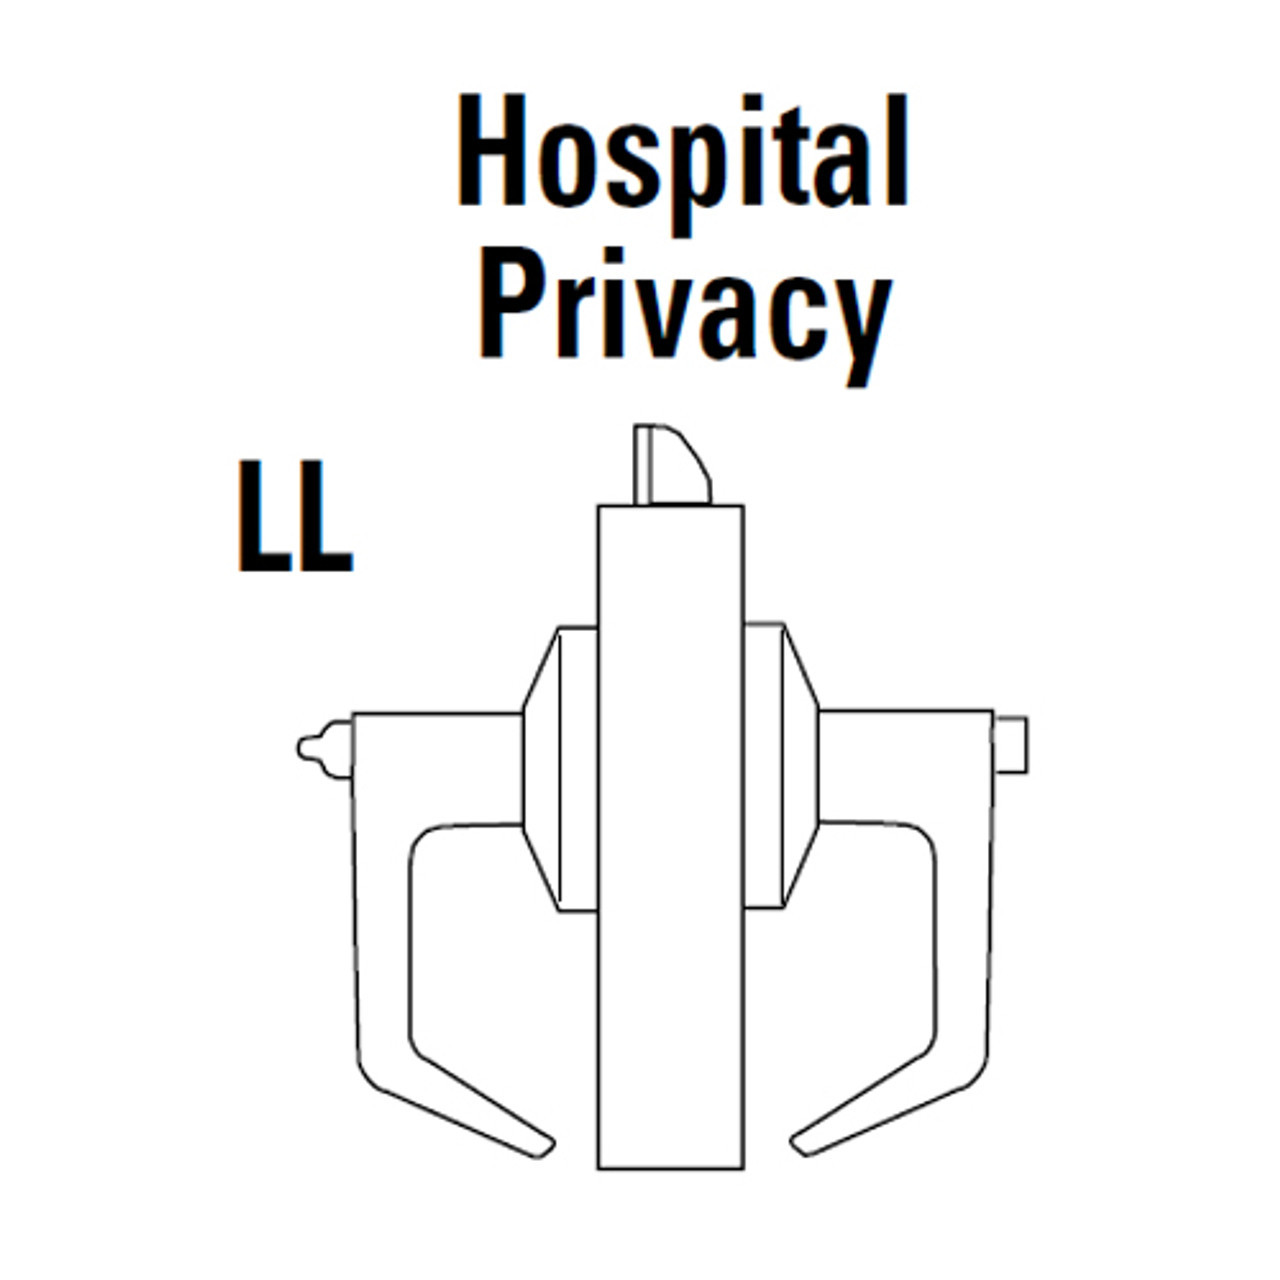 9K30LL14KSTK626LM Best 9K Series Hospital Privacy Heavy Duty Cylindrical Lever Locks in Satin Chrome